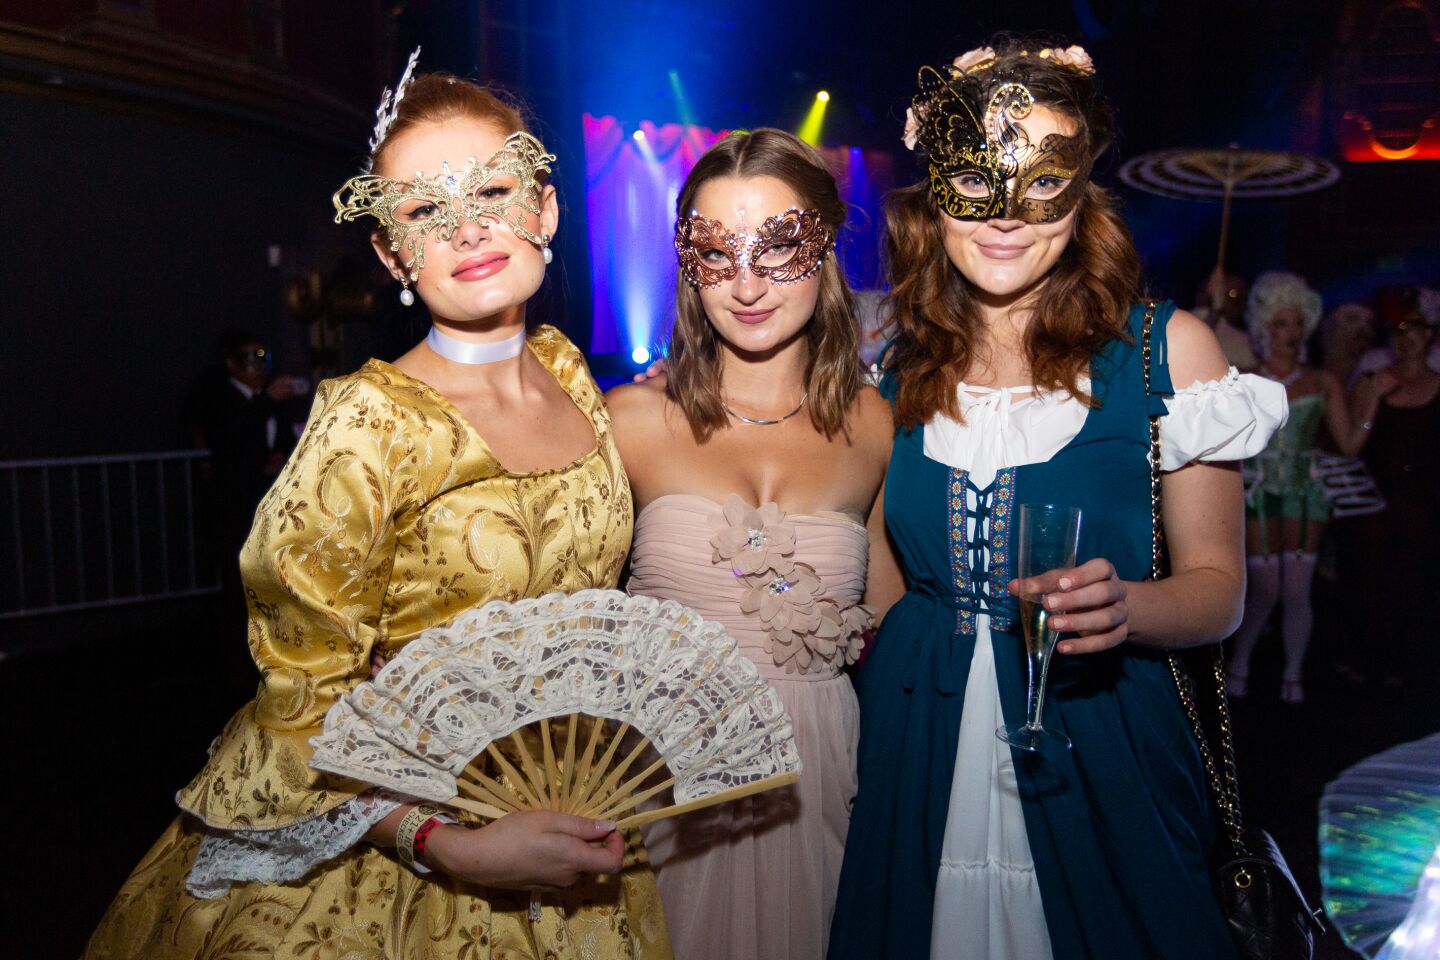 A Midsummer Masquerade Ball: French Follies